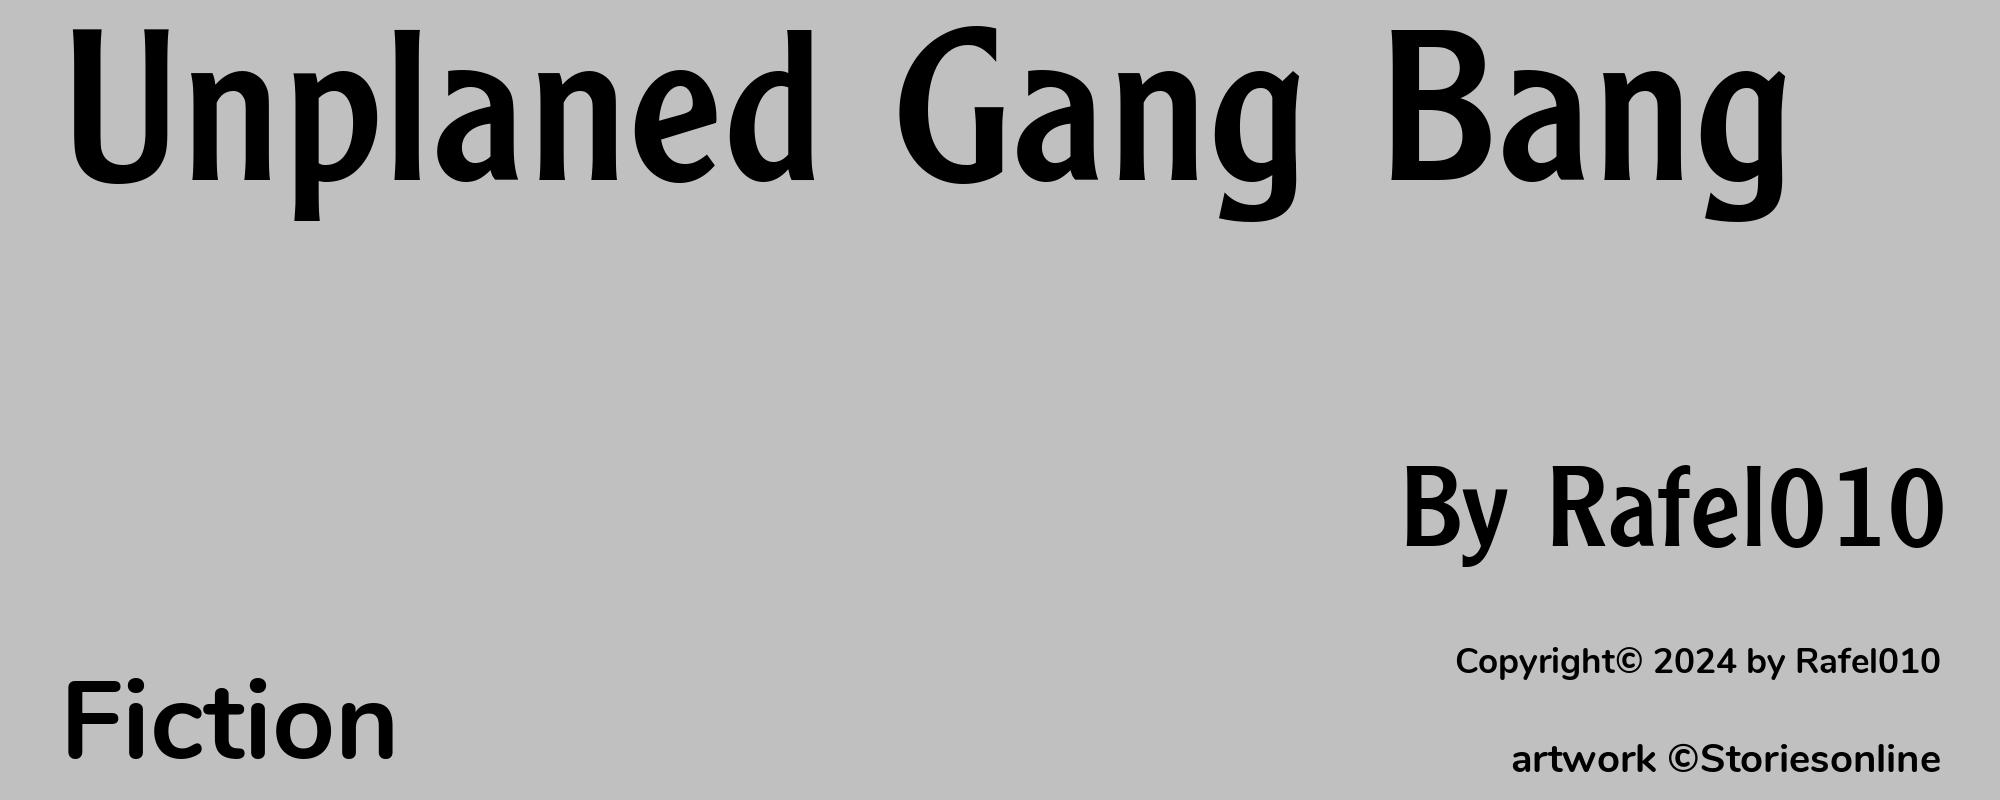 Unplaned Gang Bang - Cover